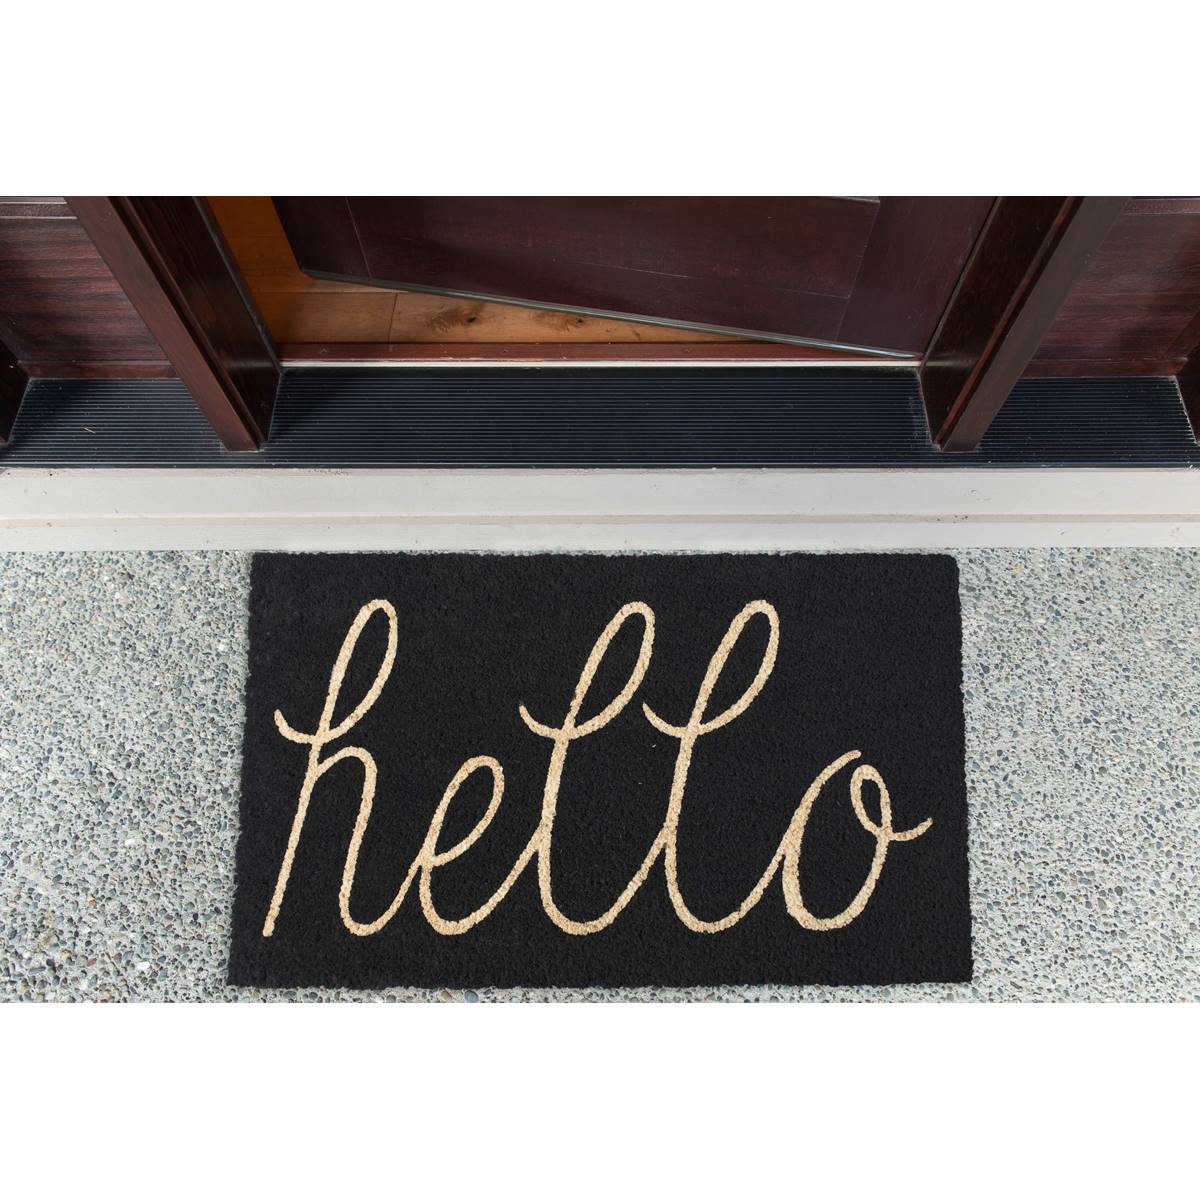 Design Imports Hello Doormat